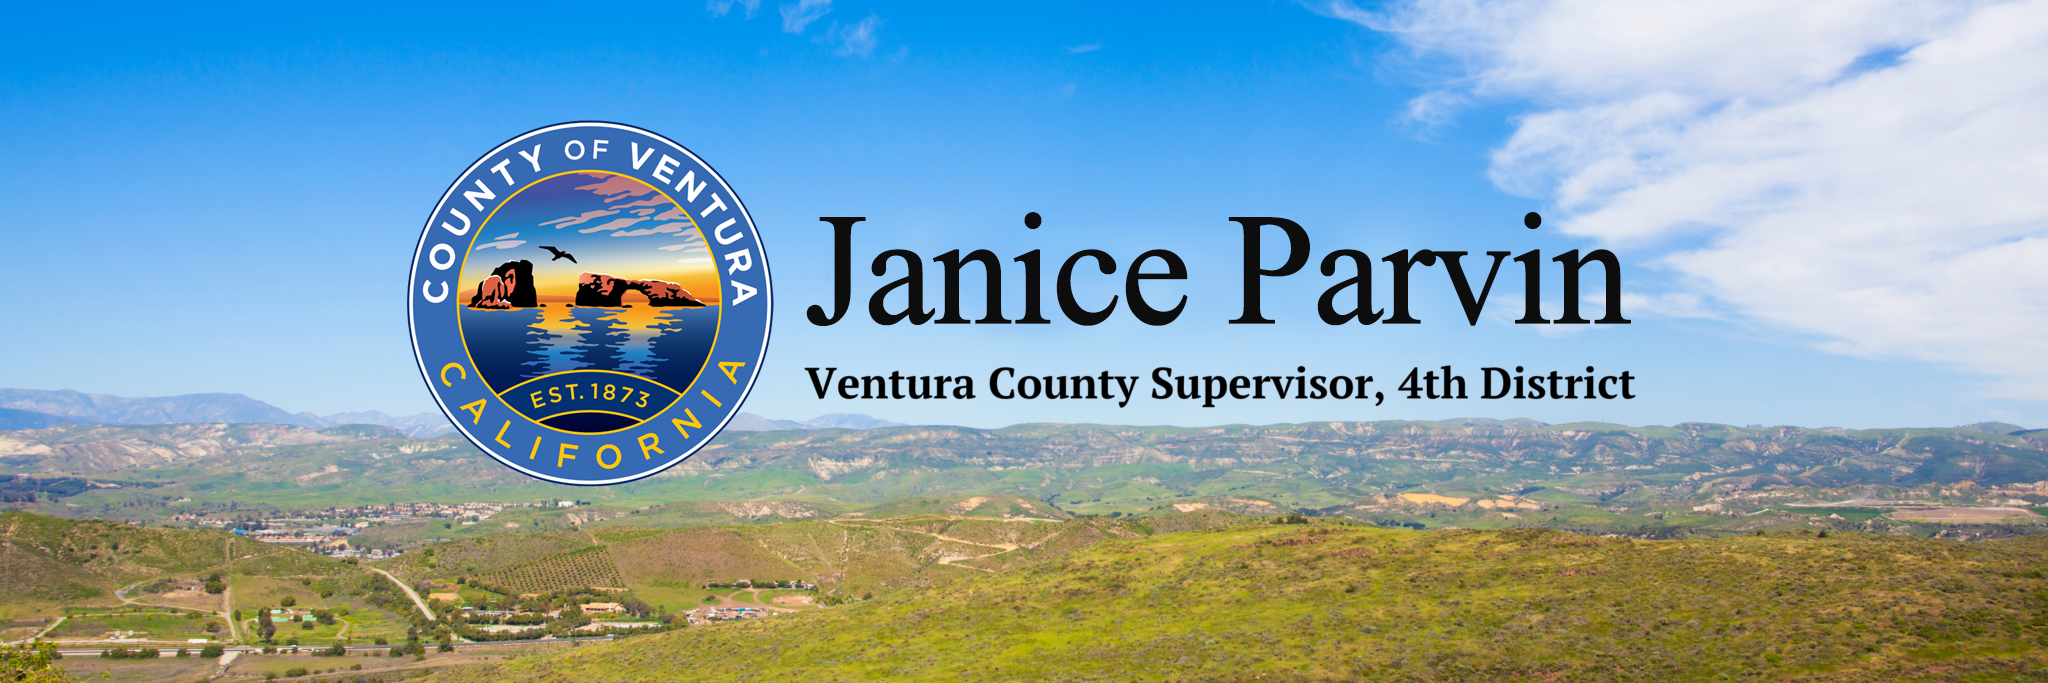 Janice Parvin Ventura County Supervisor, 4th District